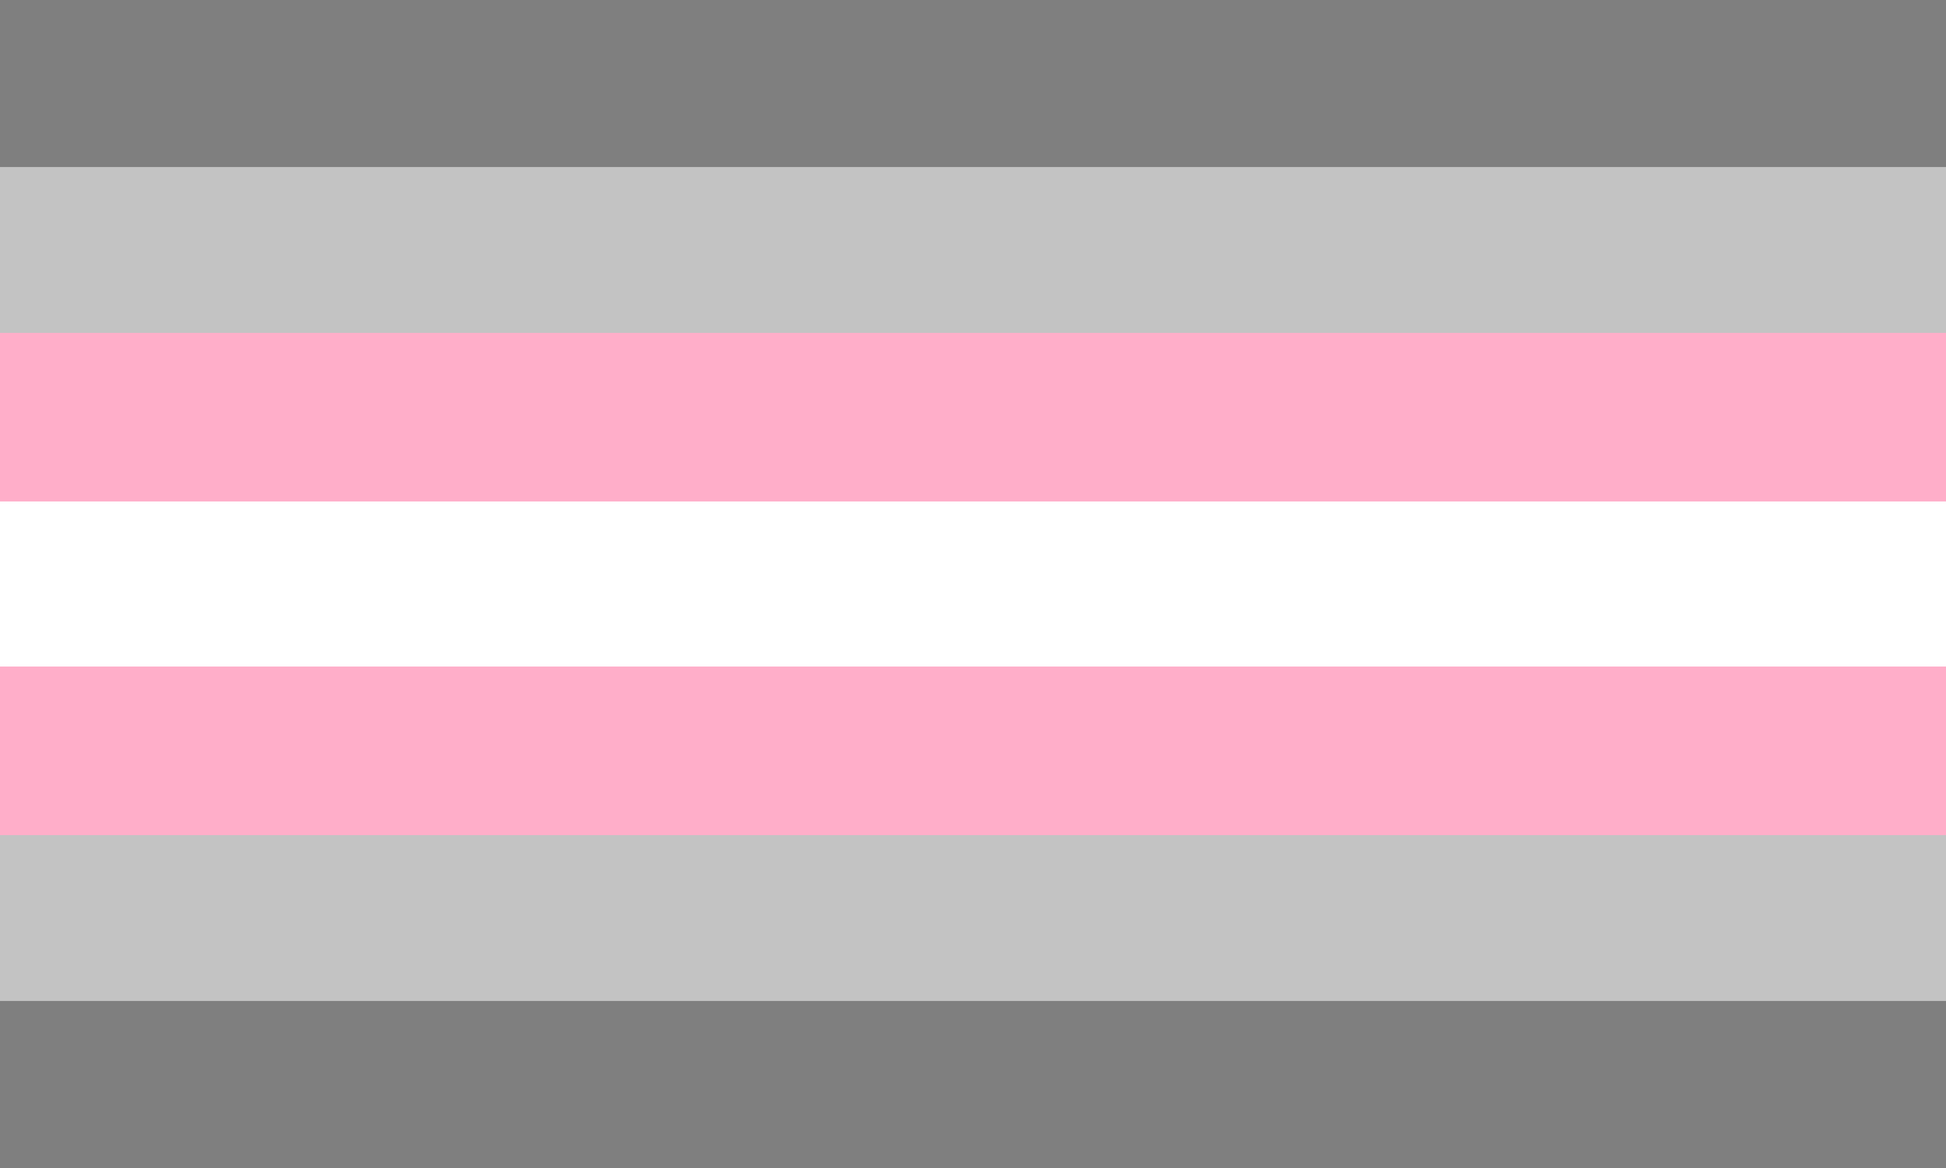 Demigirl pride flag, featuring dark grey, light grey, baby pink and white horizontal stripes.